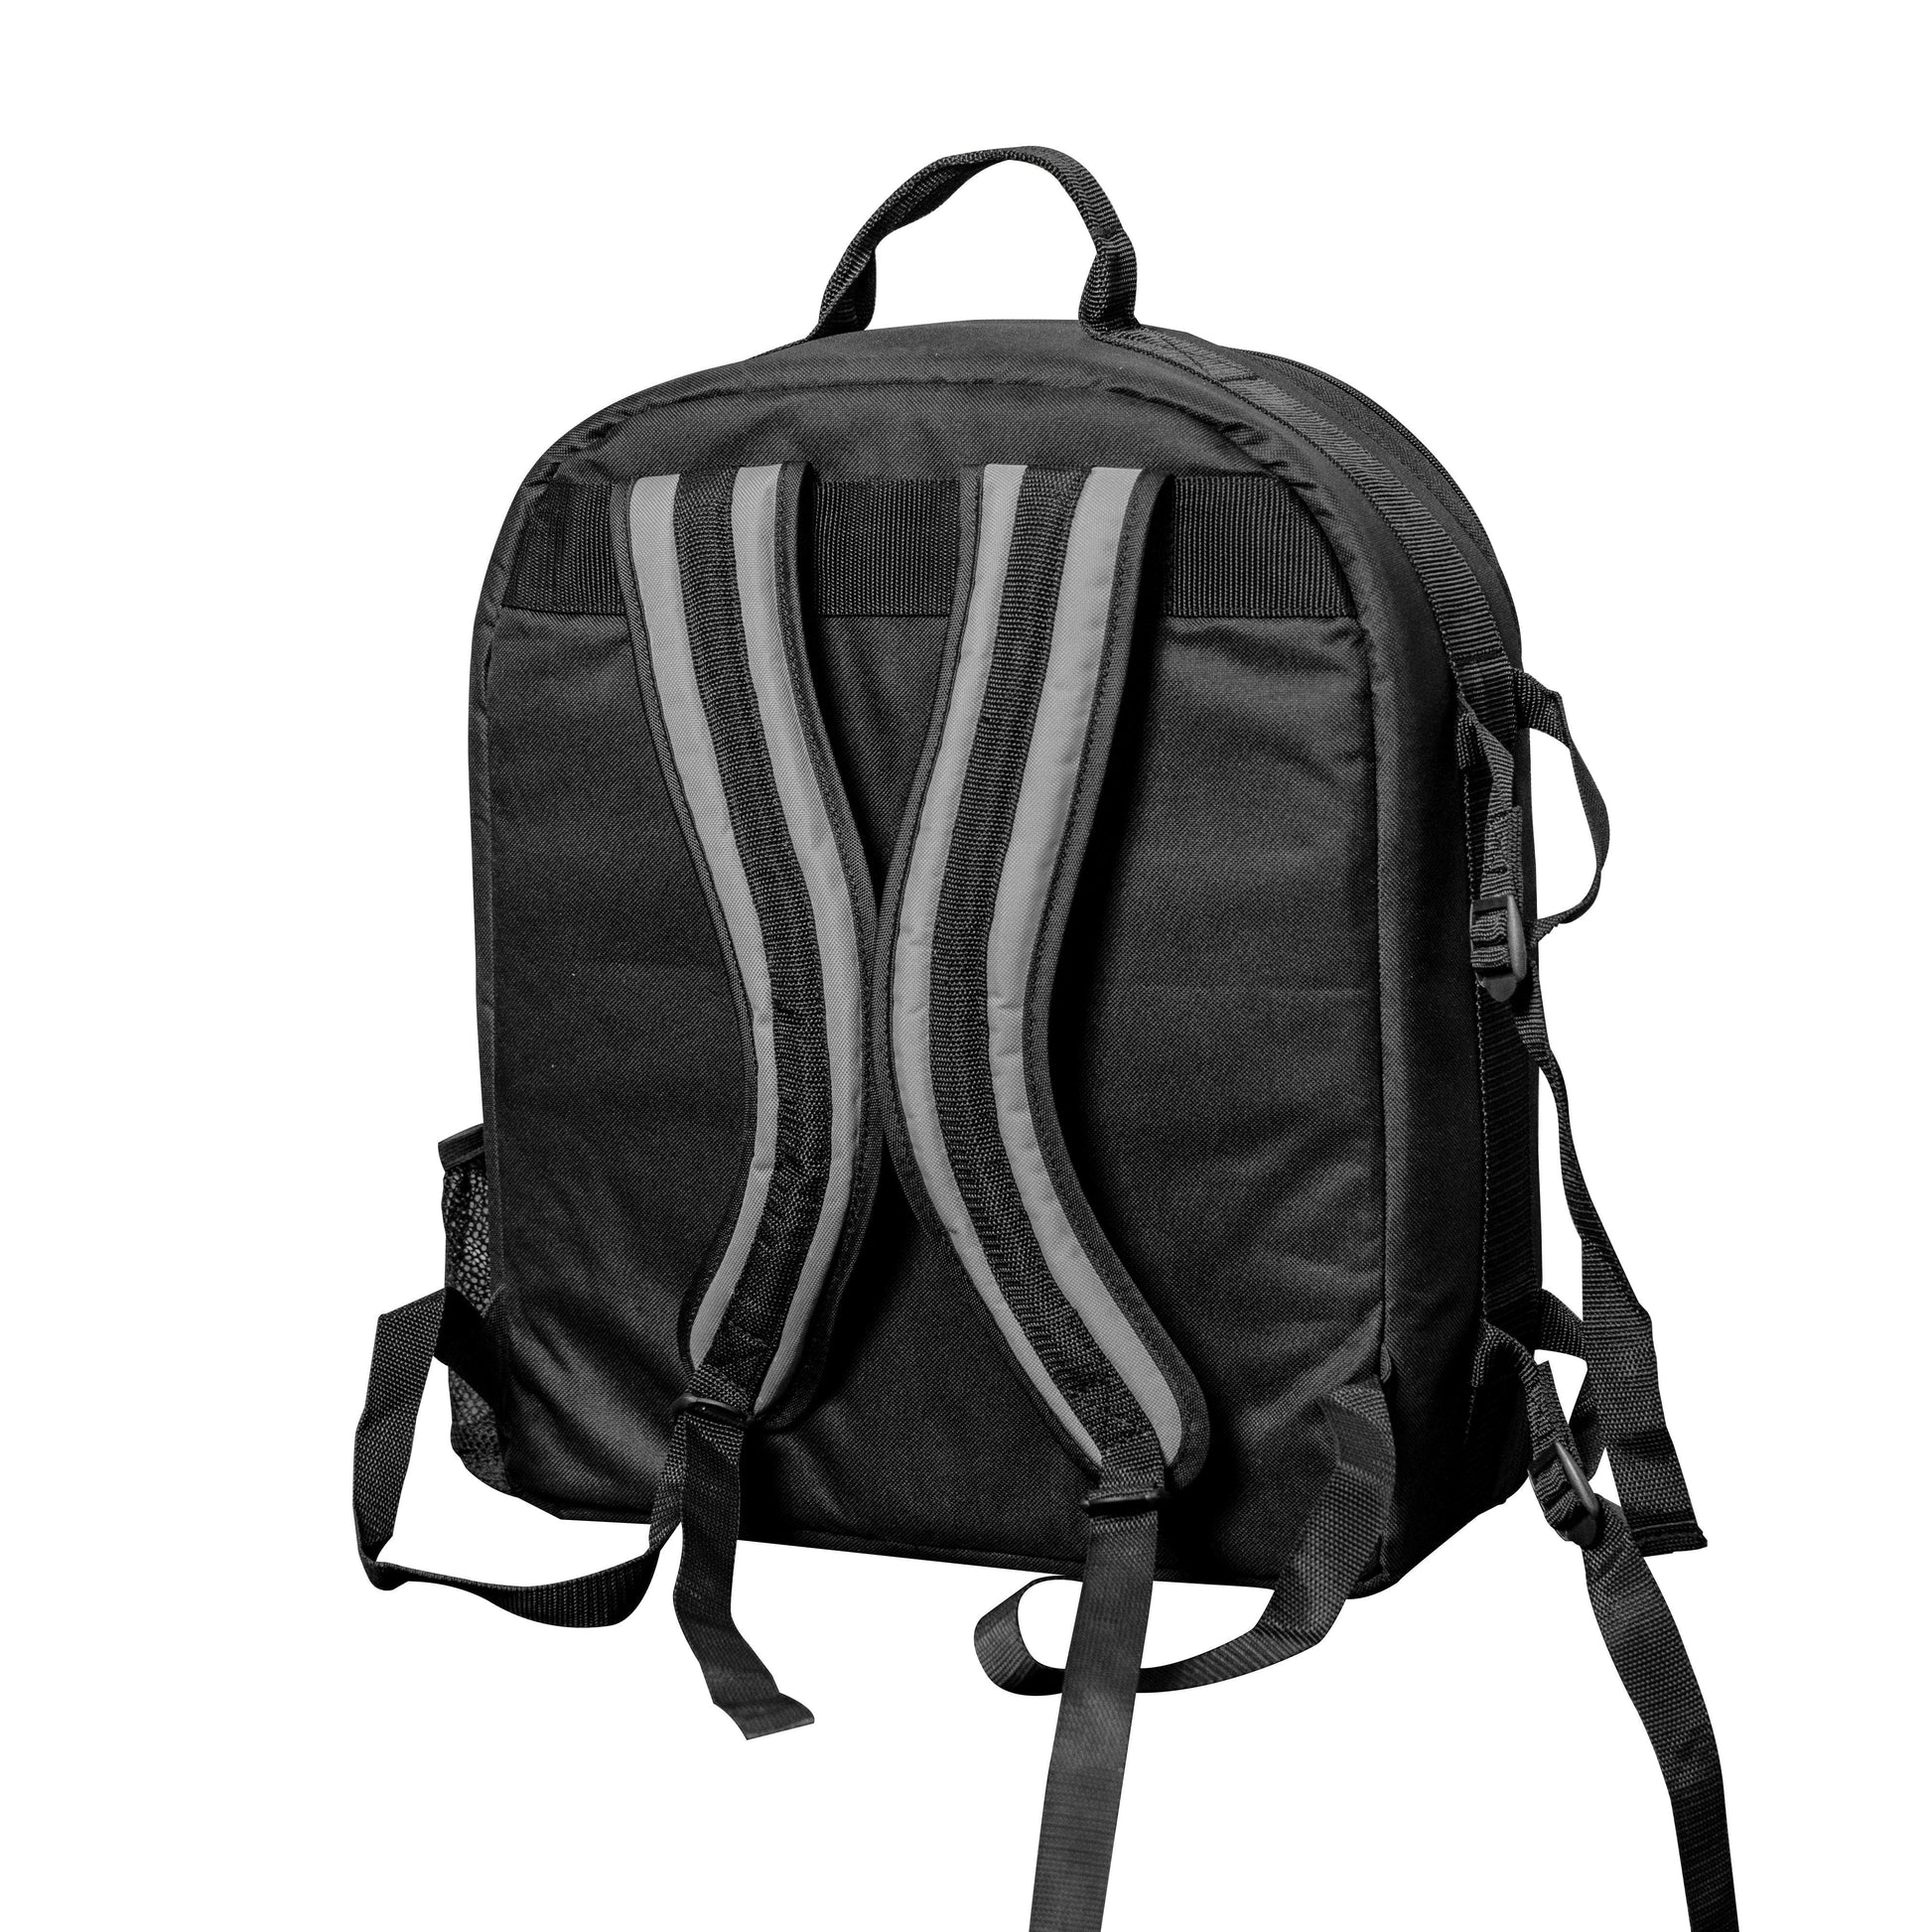 Explore Scientific Backpack Carrying Case - Silverlight Optics